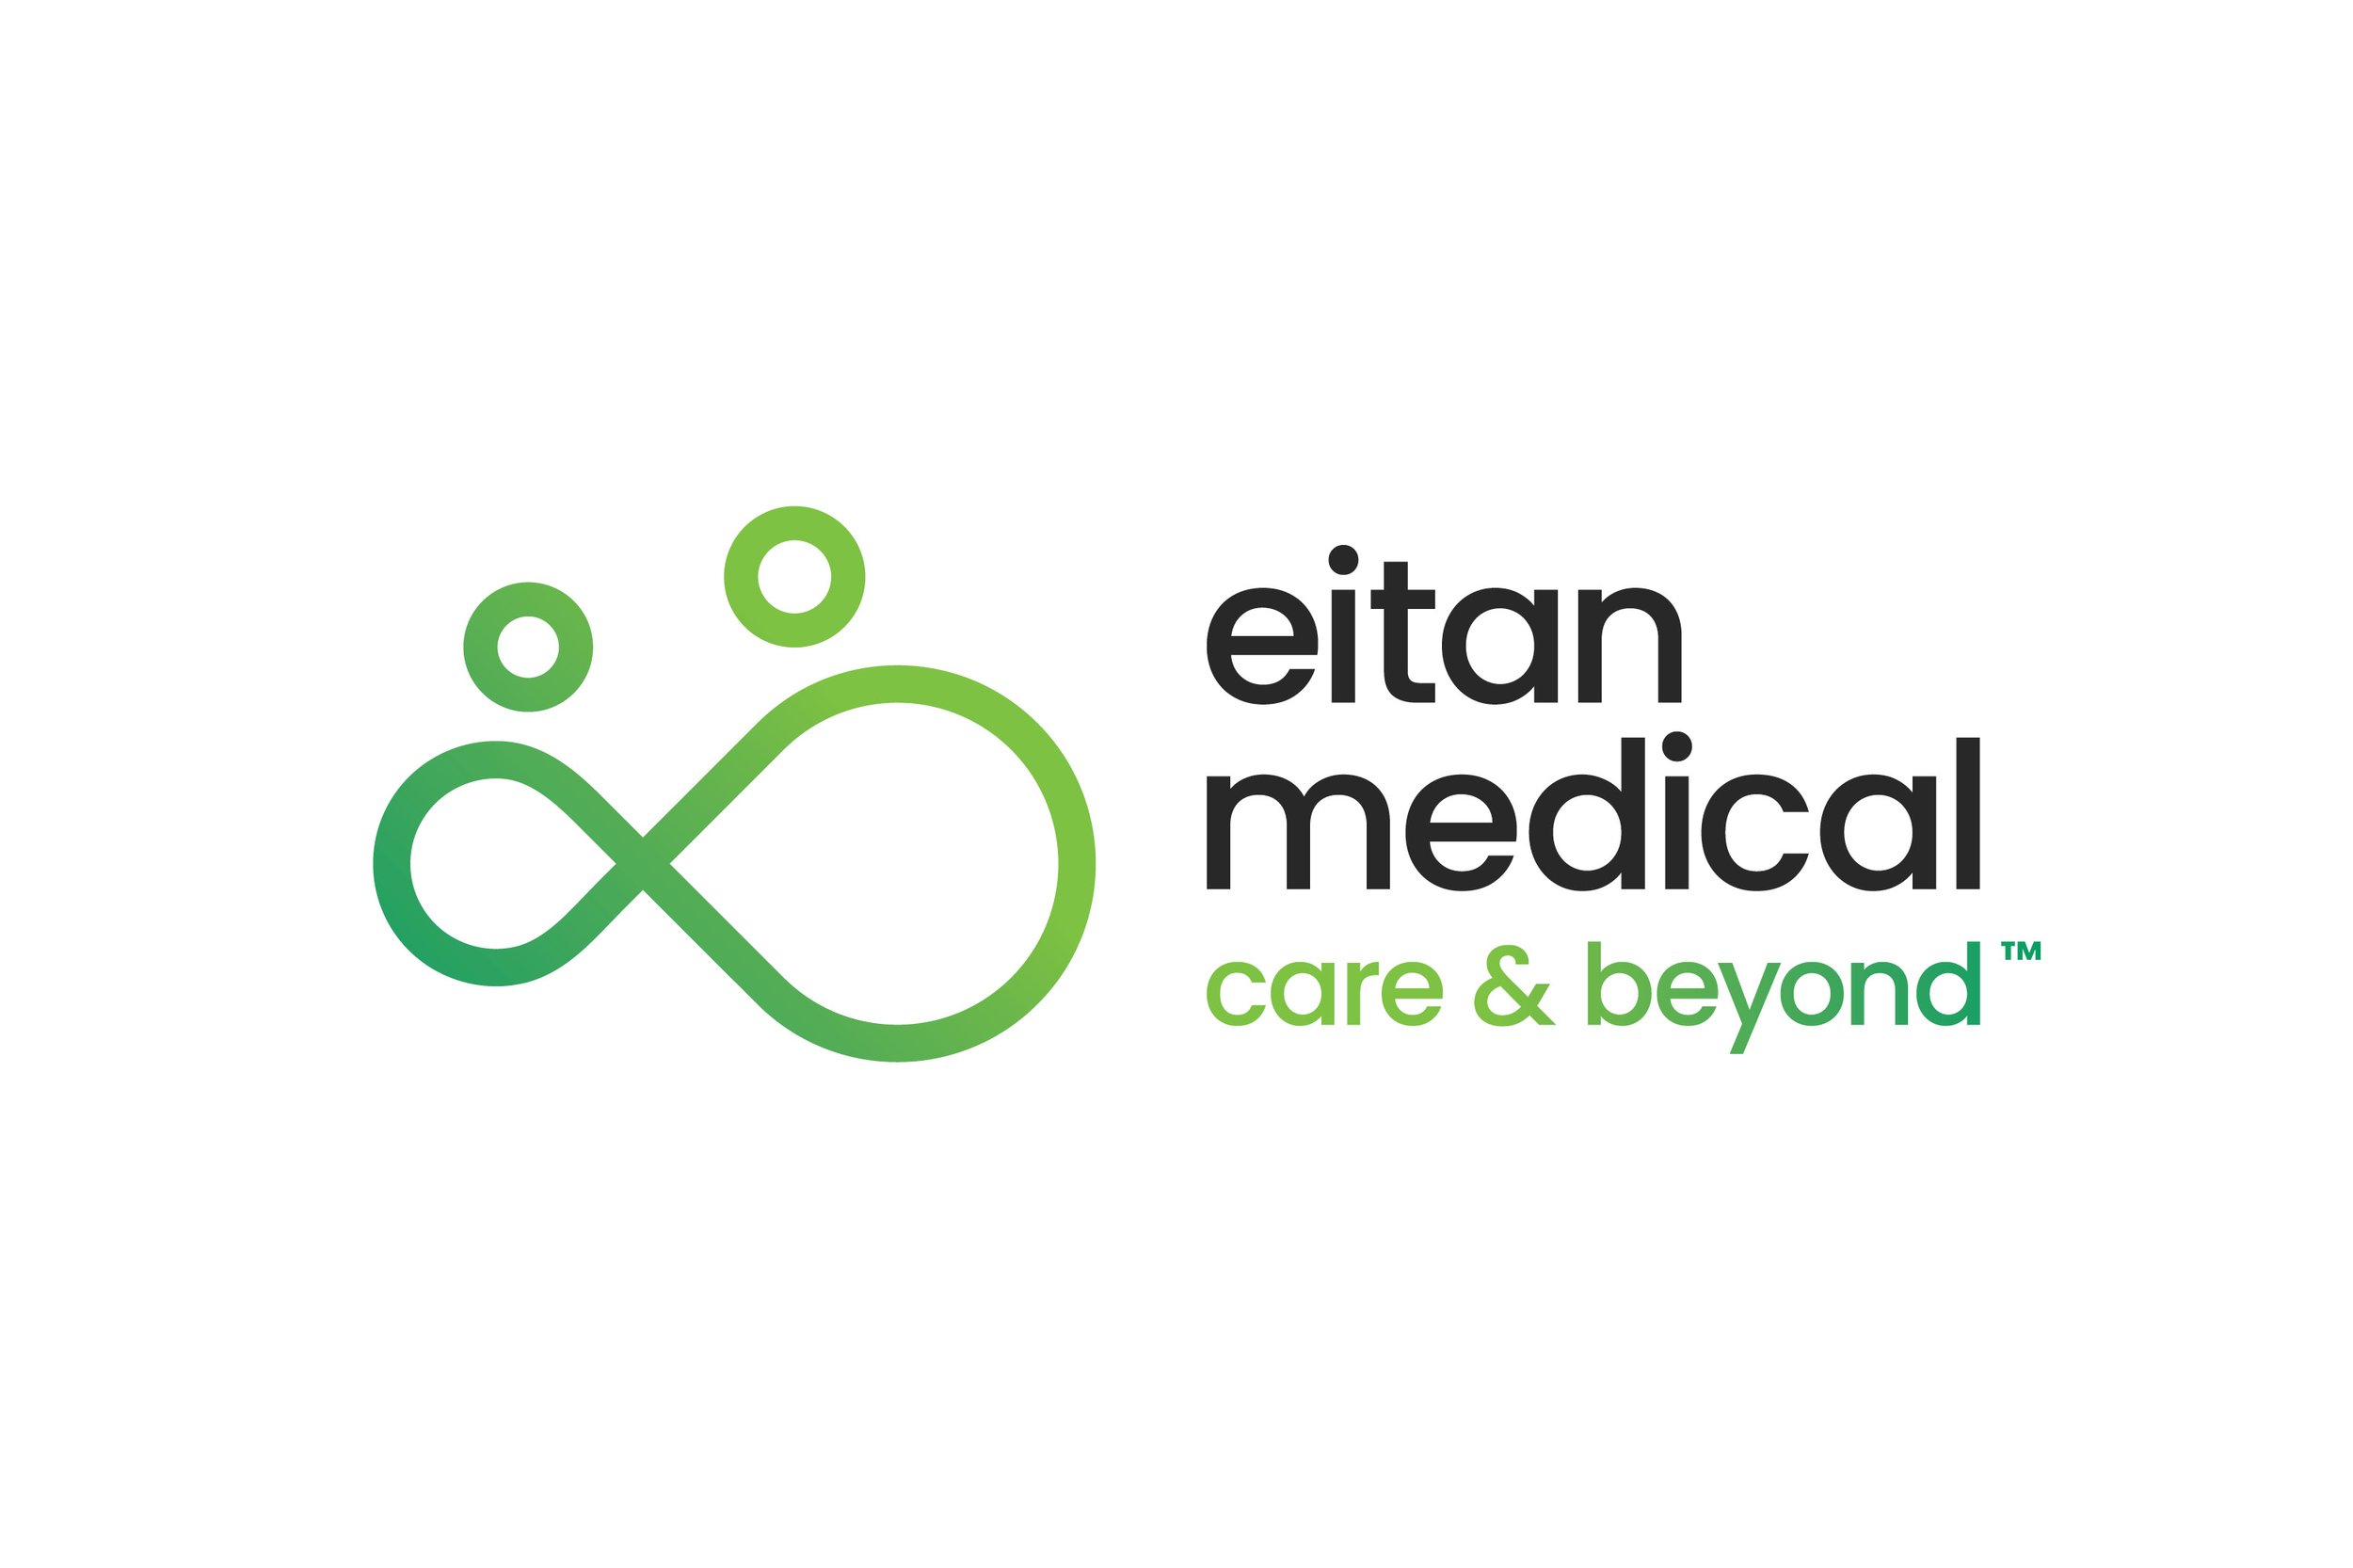 EitanMedical-HealthTech-19940383_full_color_eitan_medical_logo.jpg